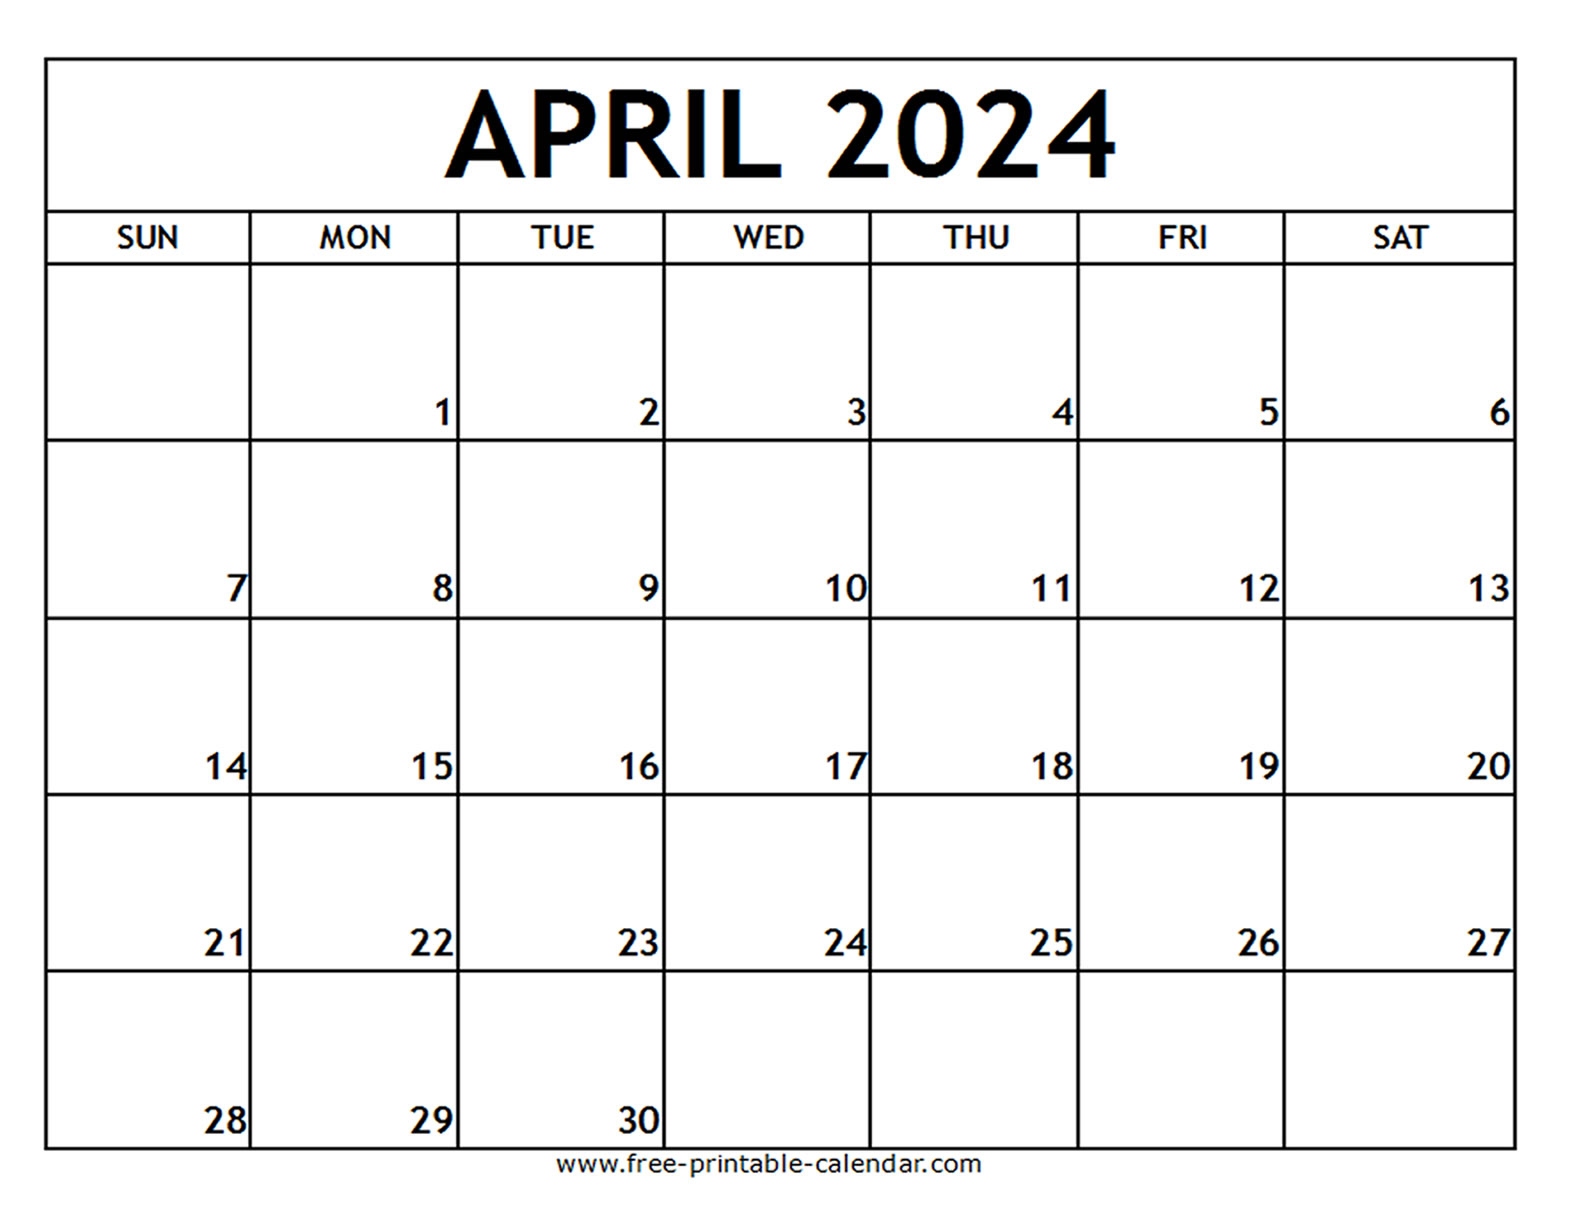 April 2024 Printable Calendar - Free-Printable-Calendar intended for Free Printable April 2024 Calendar Templates